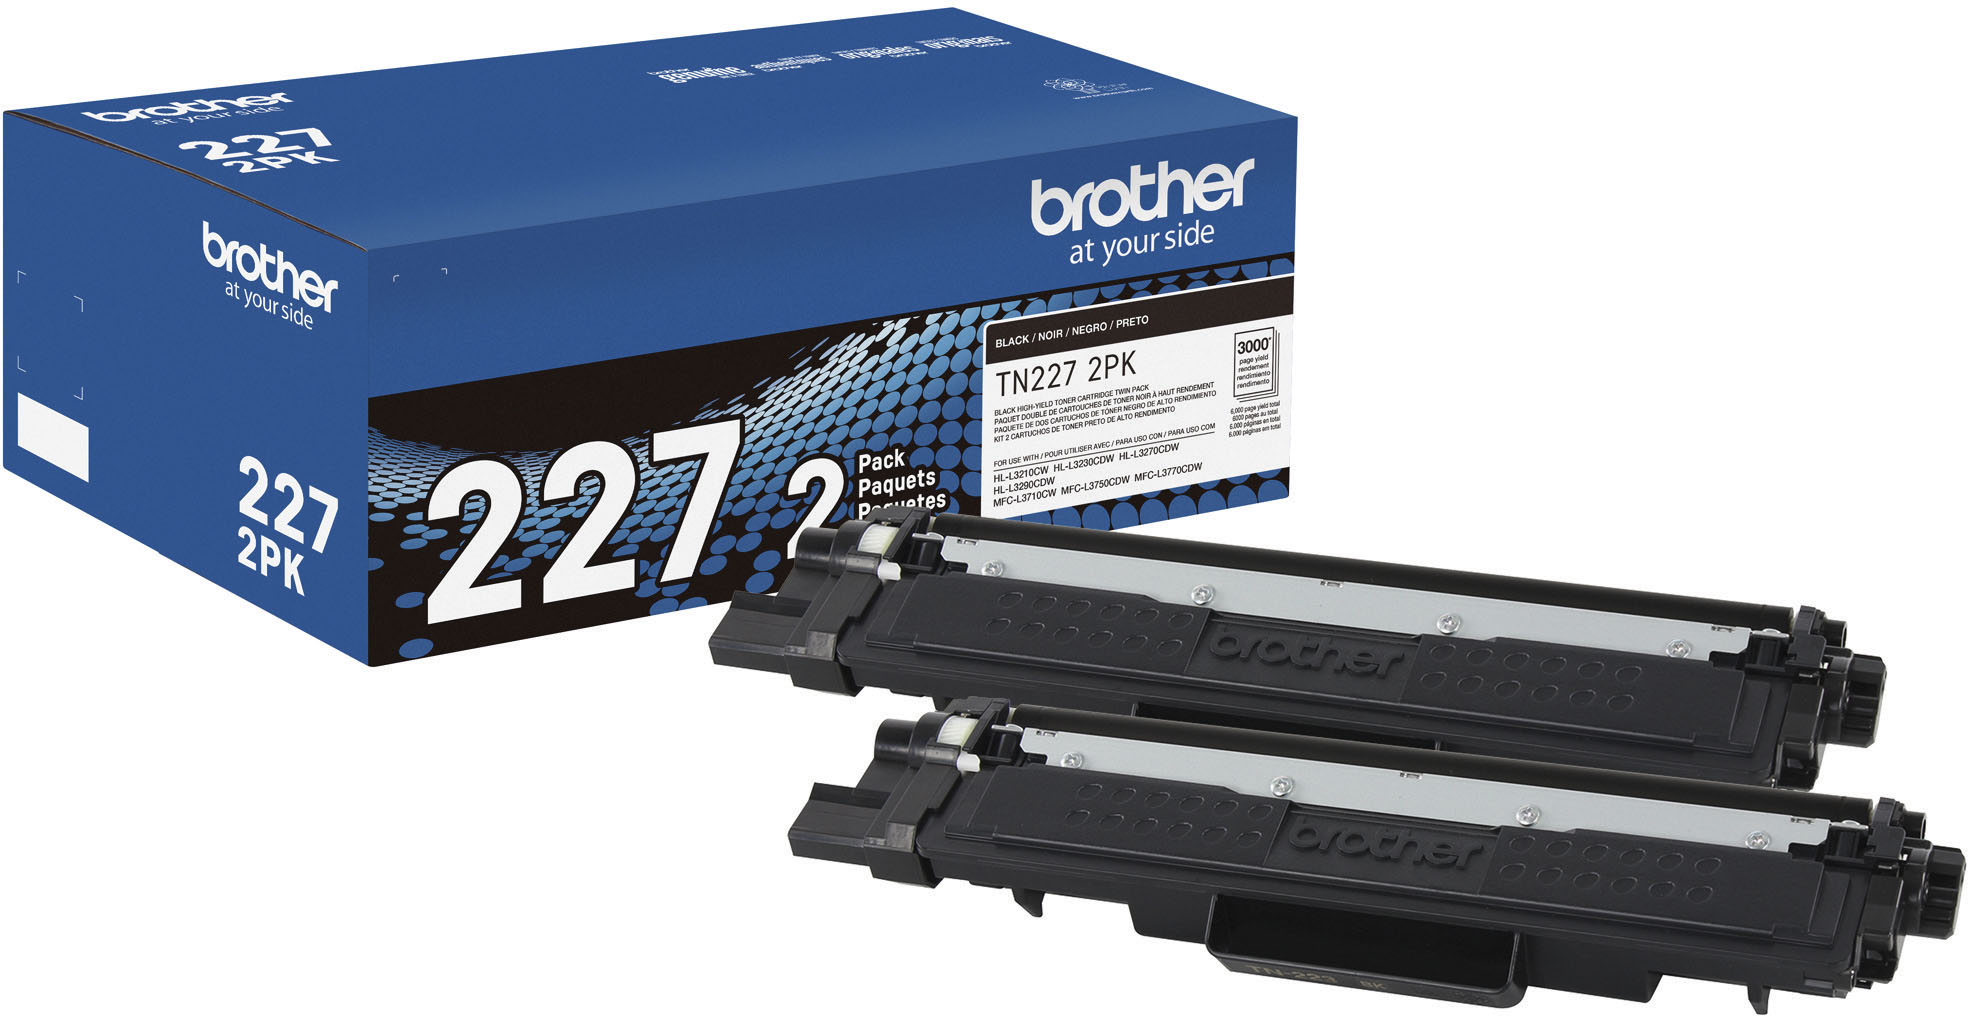 Brother TN227 2PK 2-Pack High-Yield Toner Cartridges Black TN-2272PK - Best  Buy